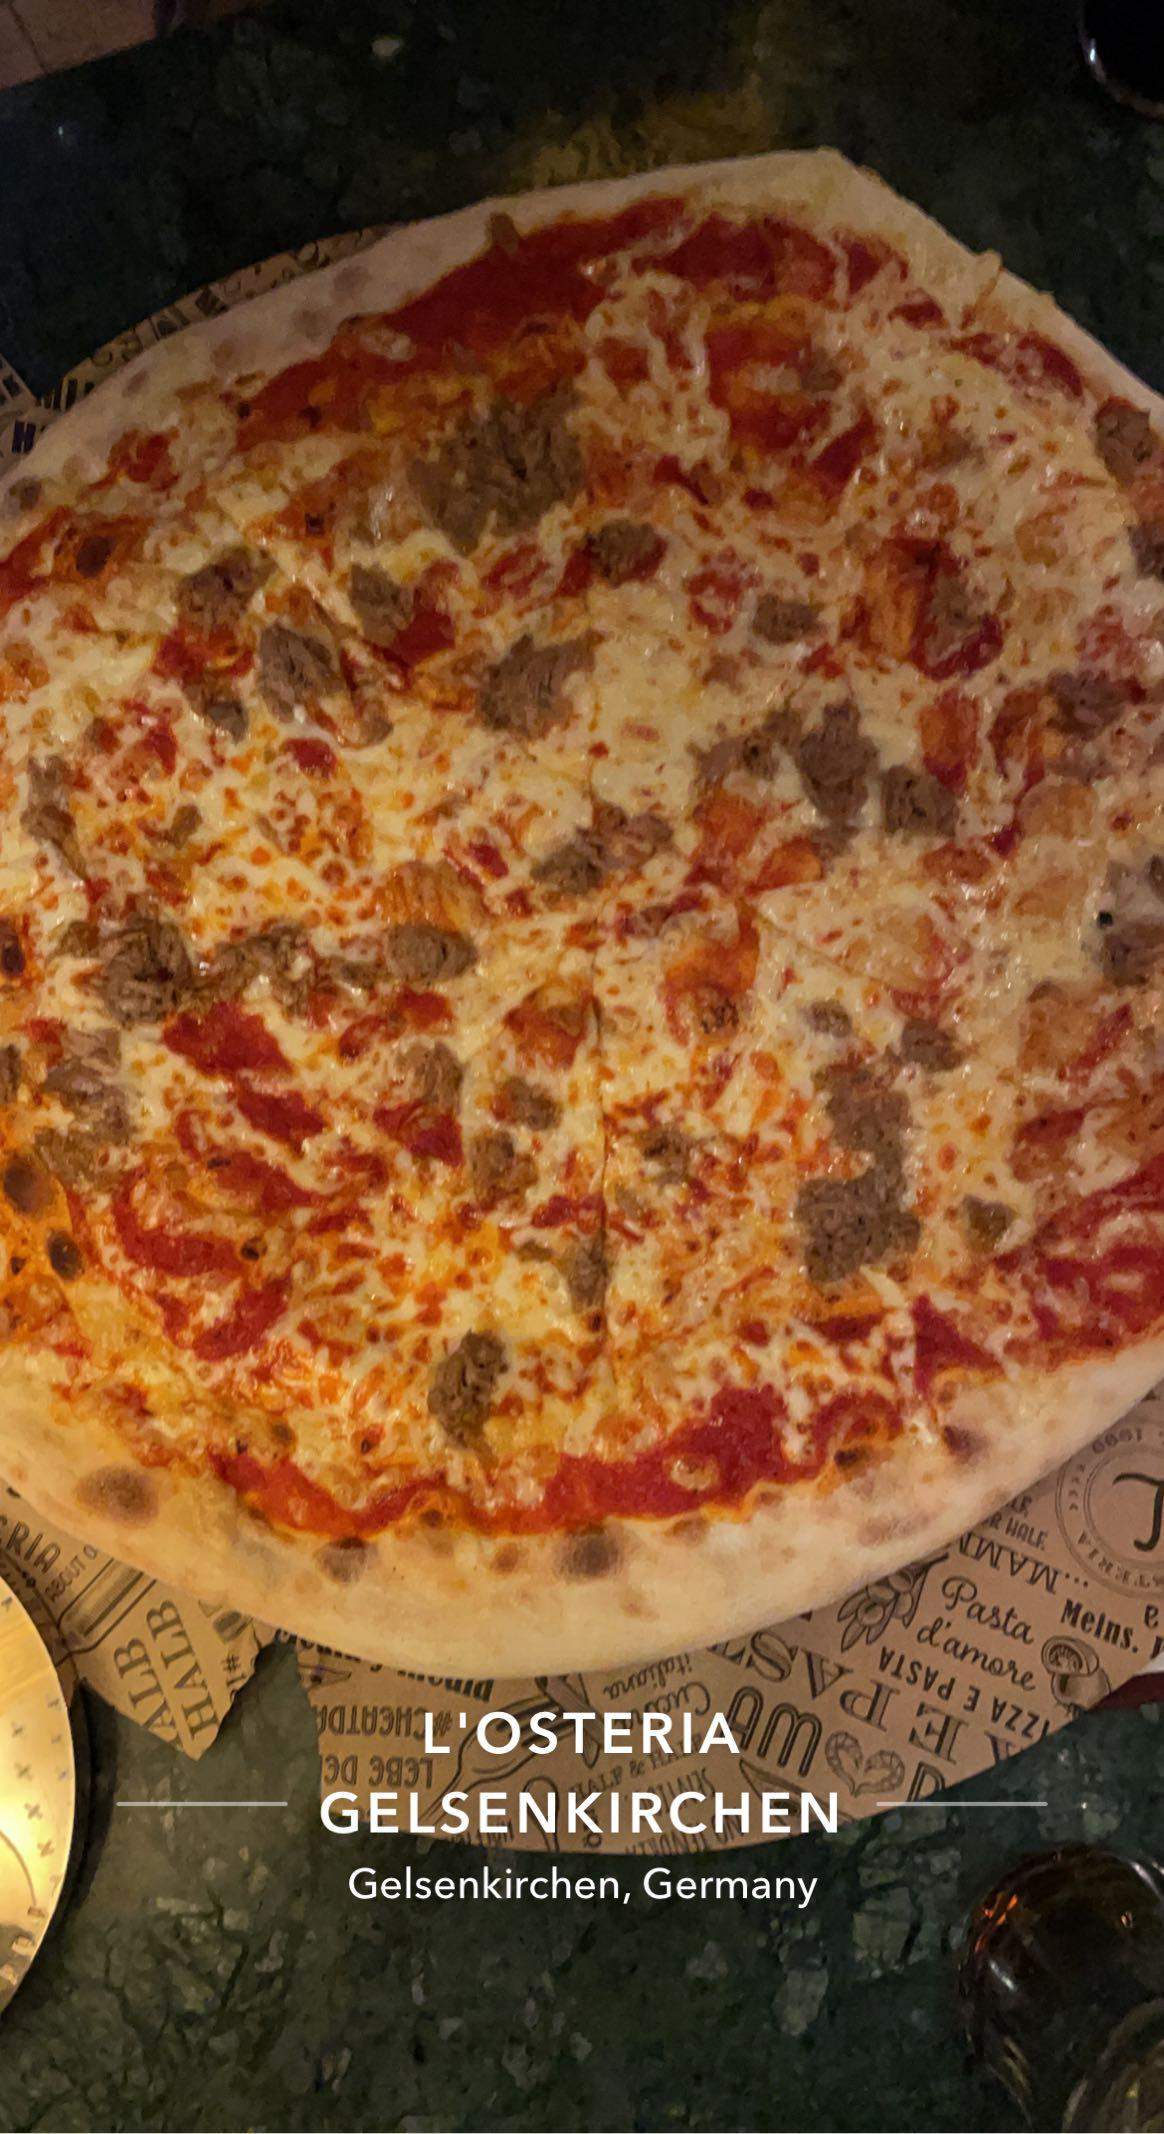 Wie viel Kalorien hat die halbe Pizza ca? (Sport